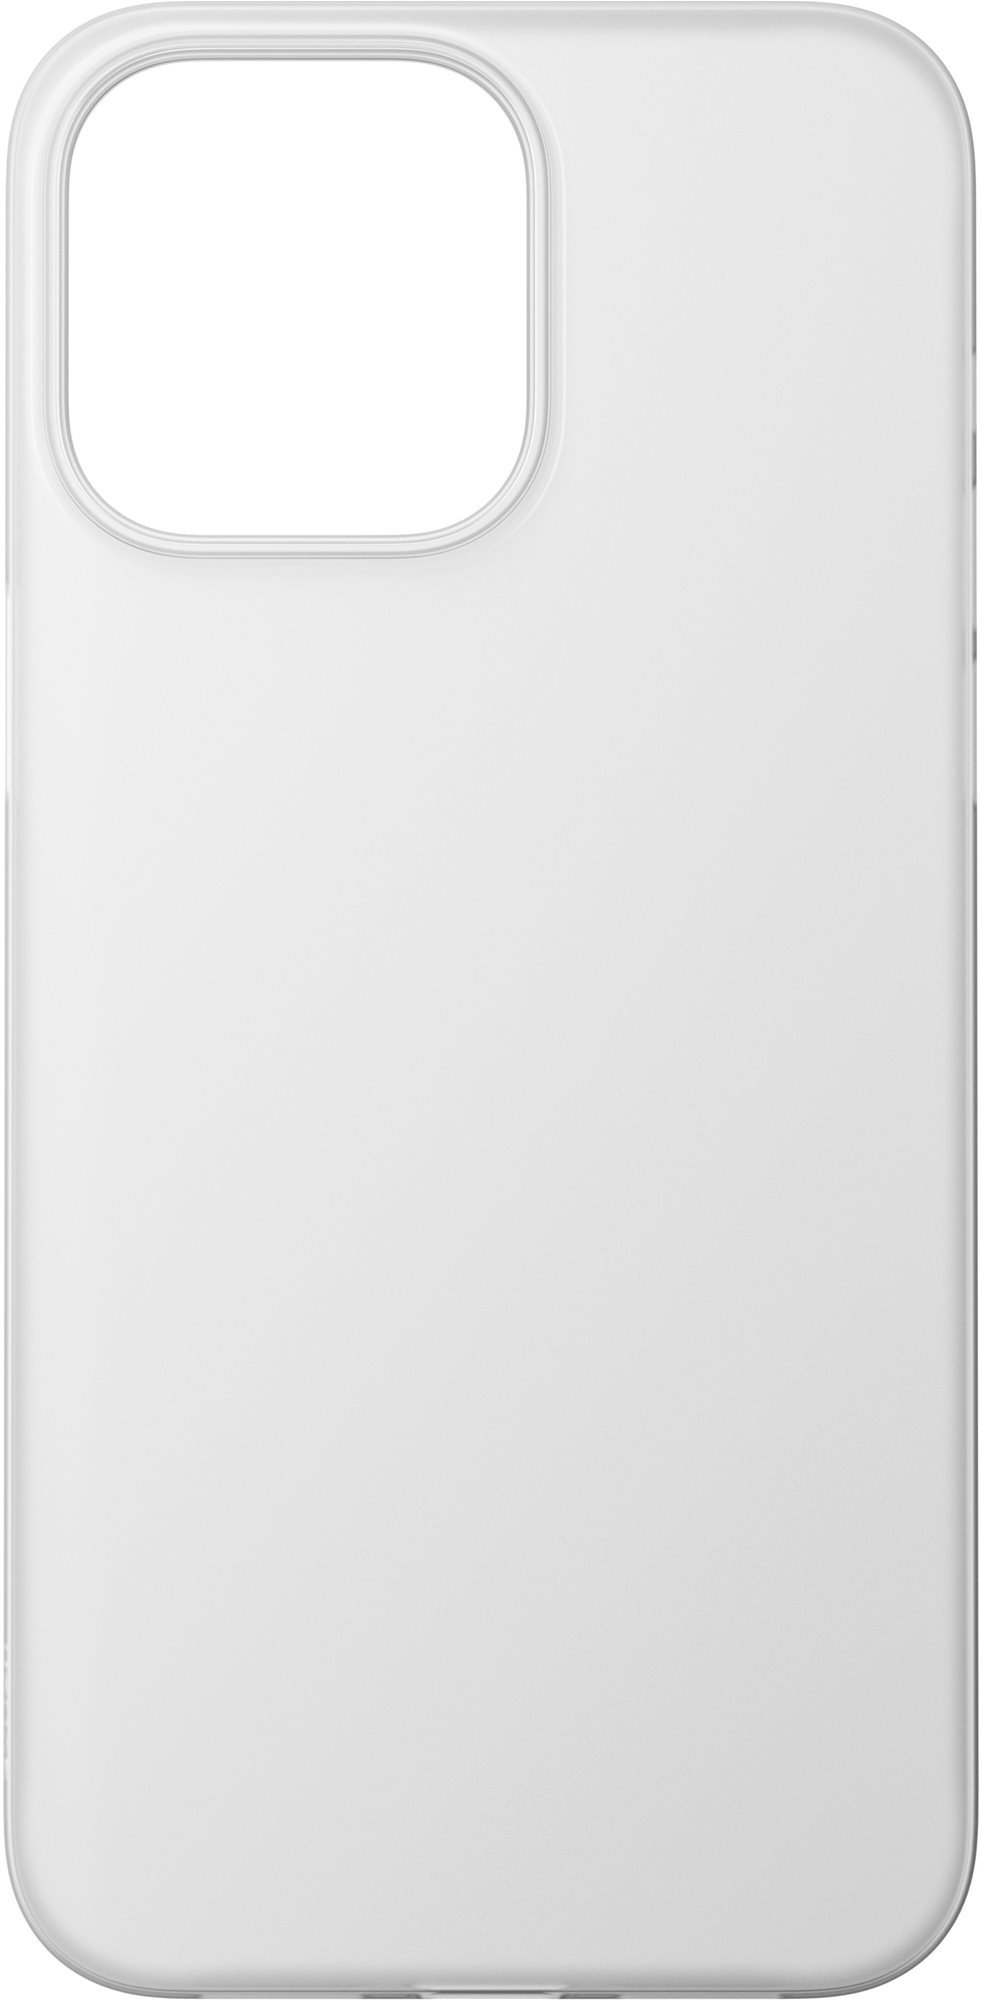 Telefon tok Nomad Super Slim Case White iPhone 14 Pro Max